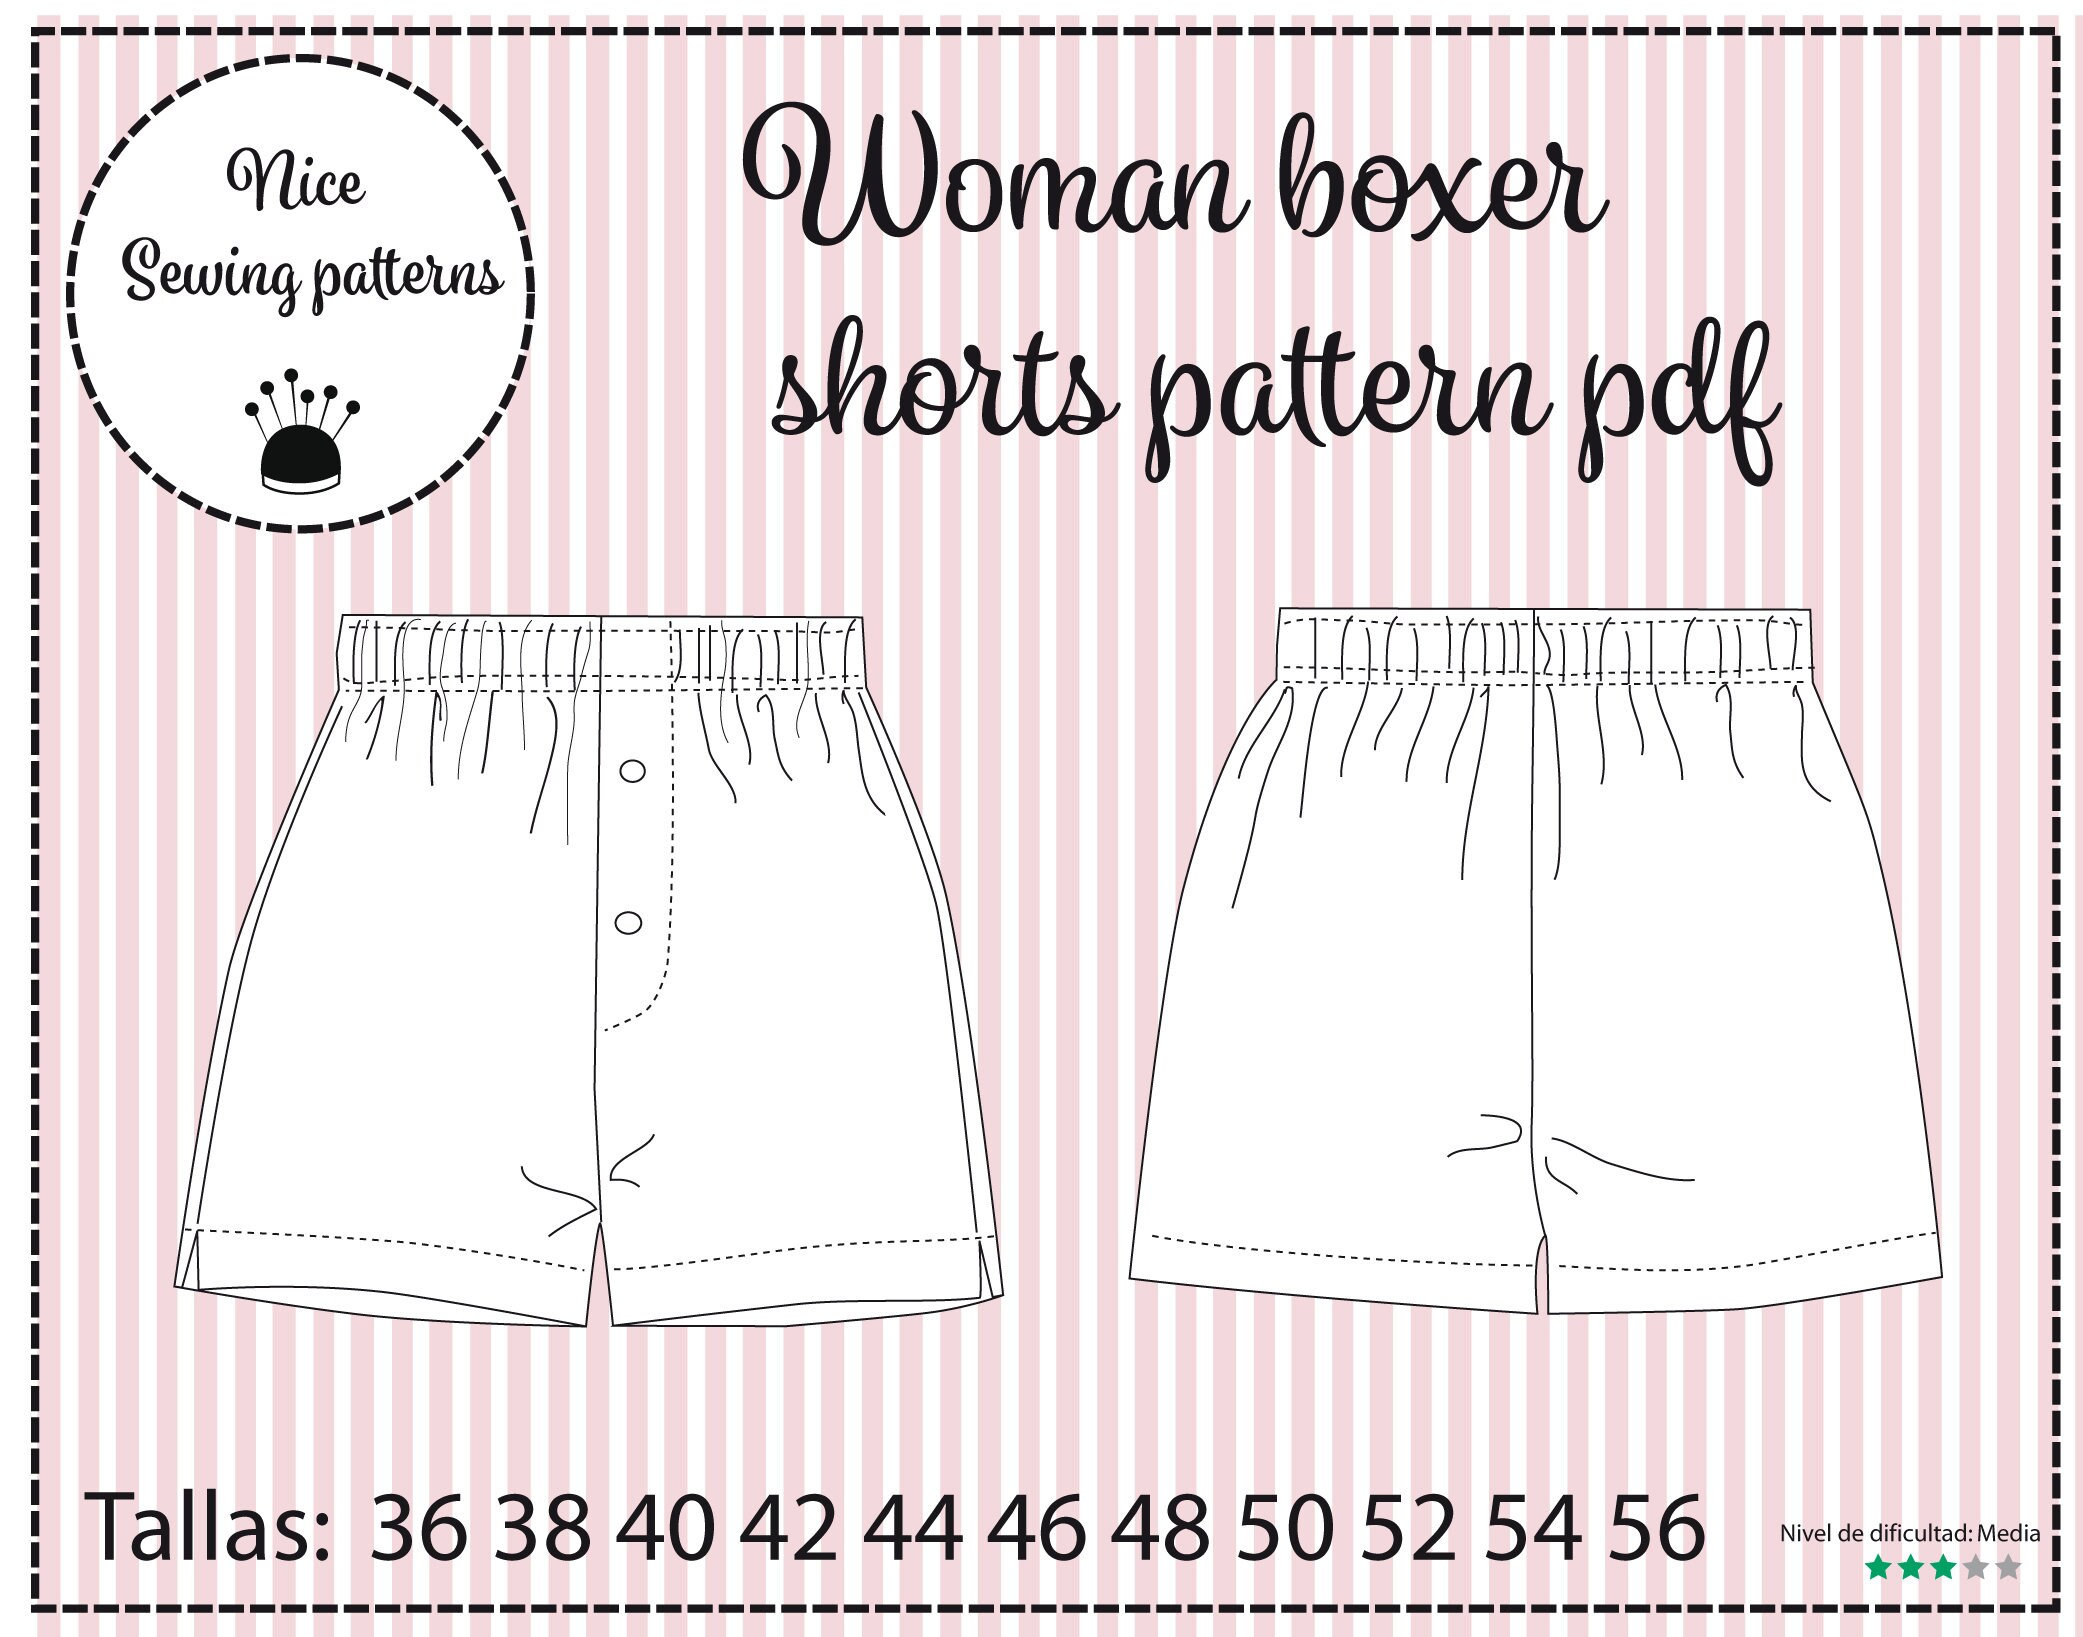 Women Boxer Shorts Pattern and Tutorial PDF Download/patron De